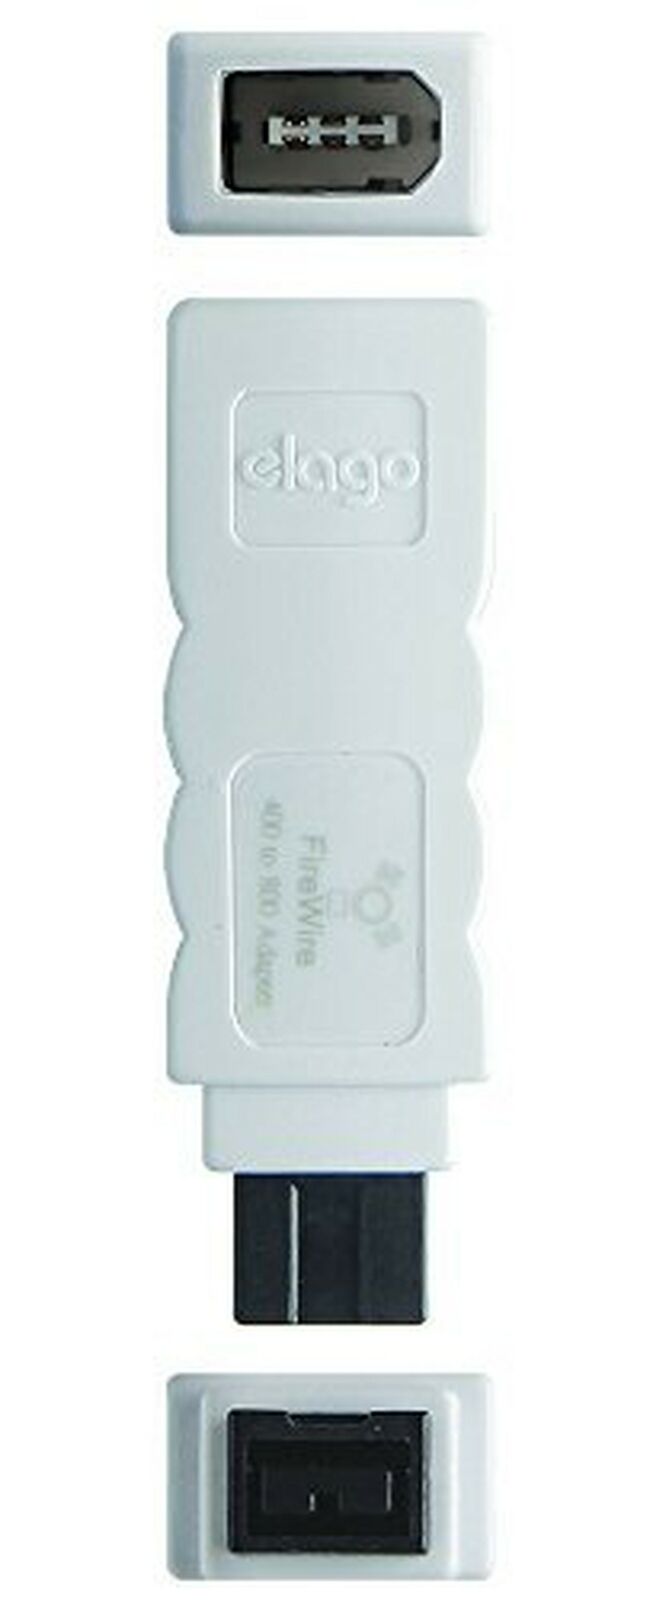 FireWire 400 to 800 Adapter - elago® FireWire Adapter [White]